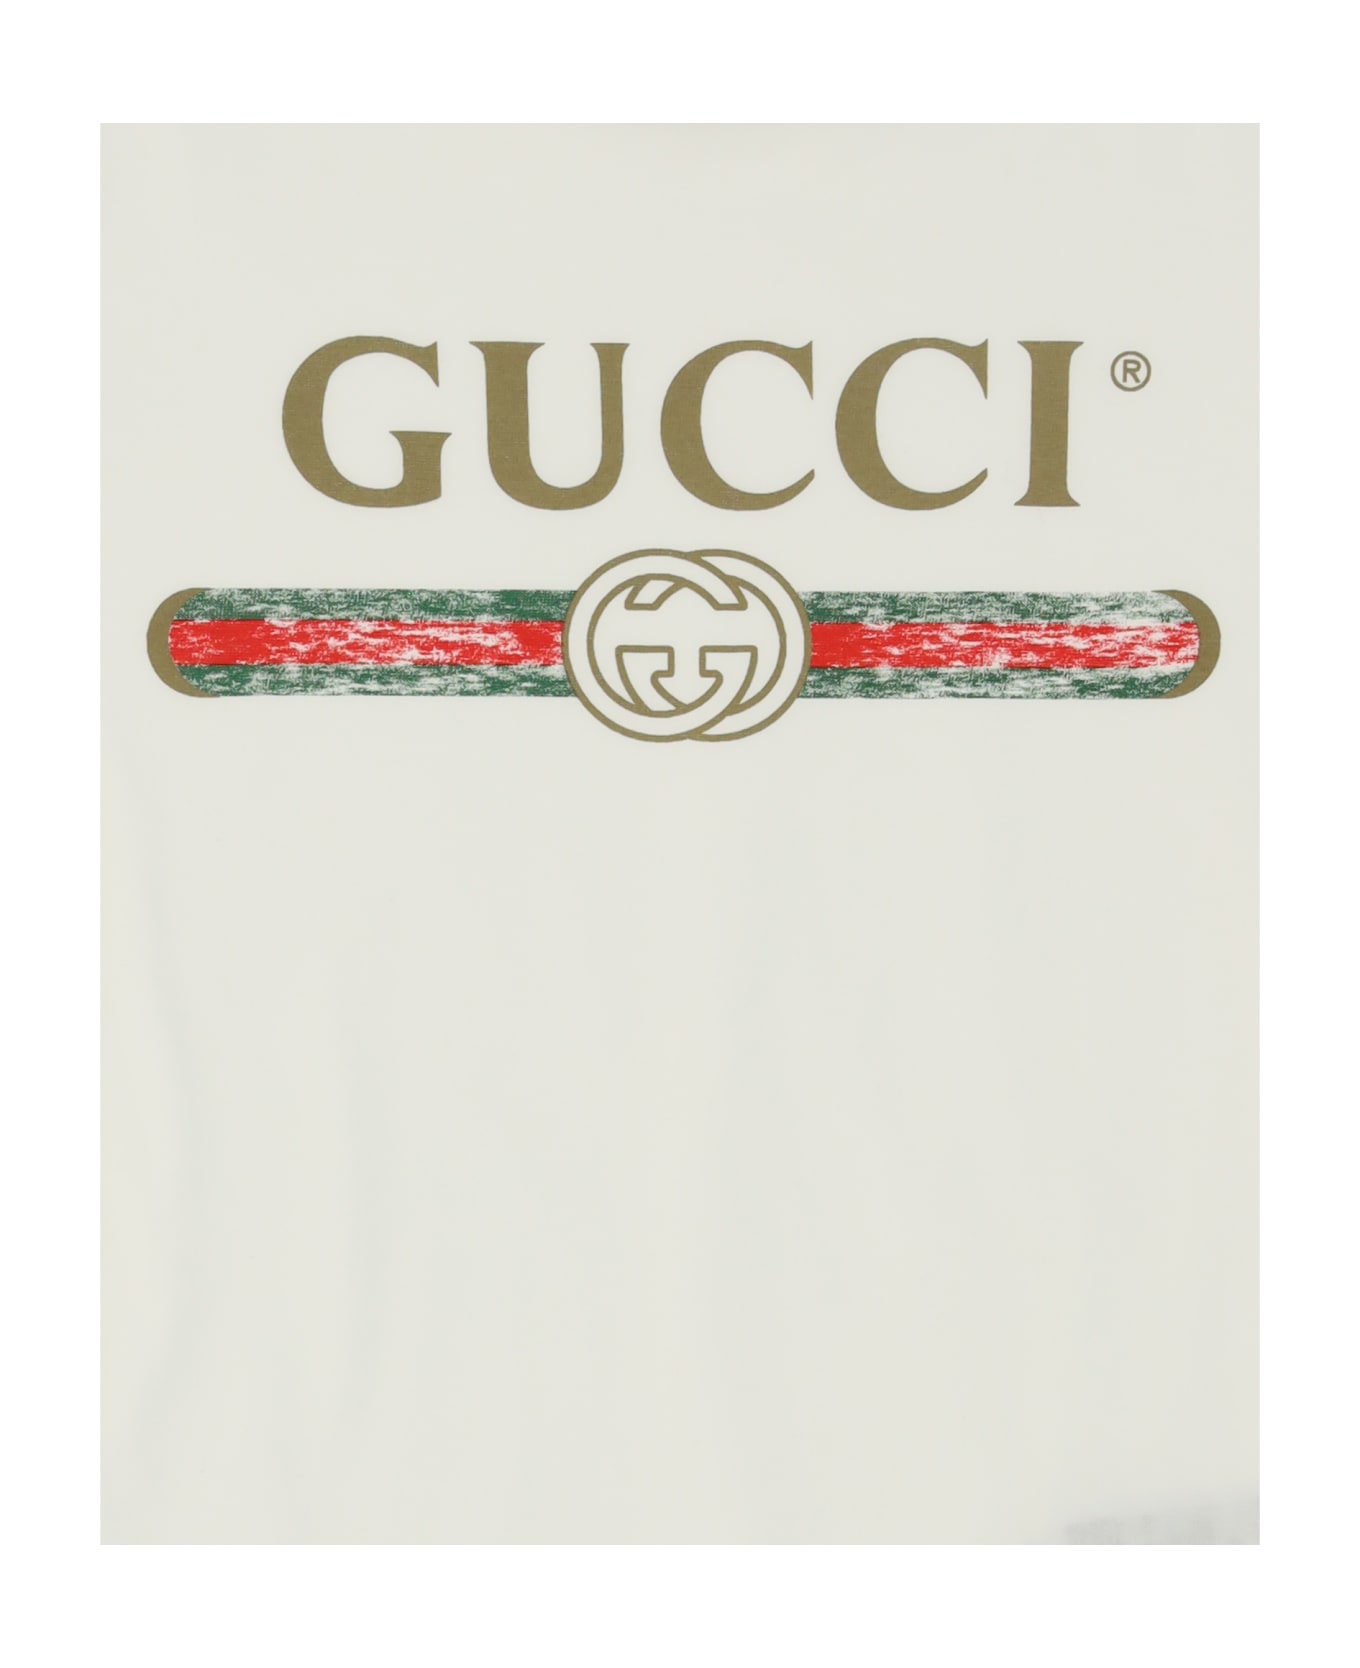 Gucci T-shirt For Boy - WHITE